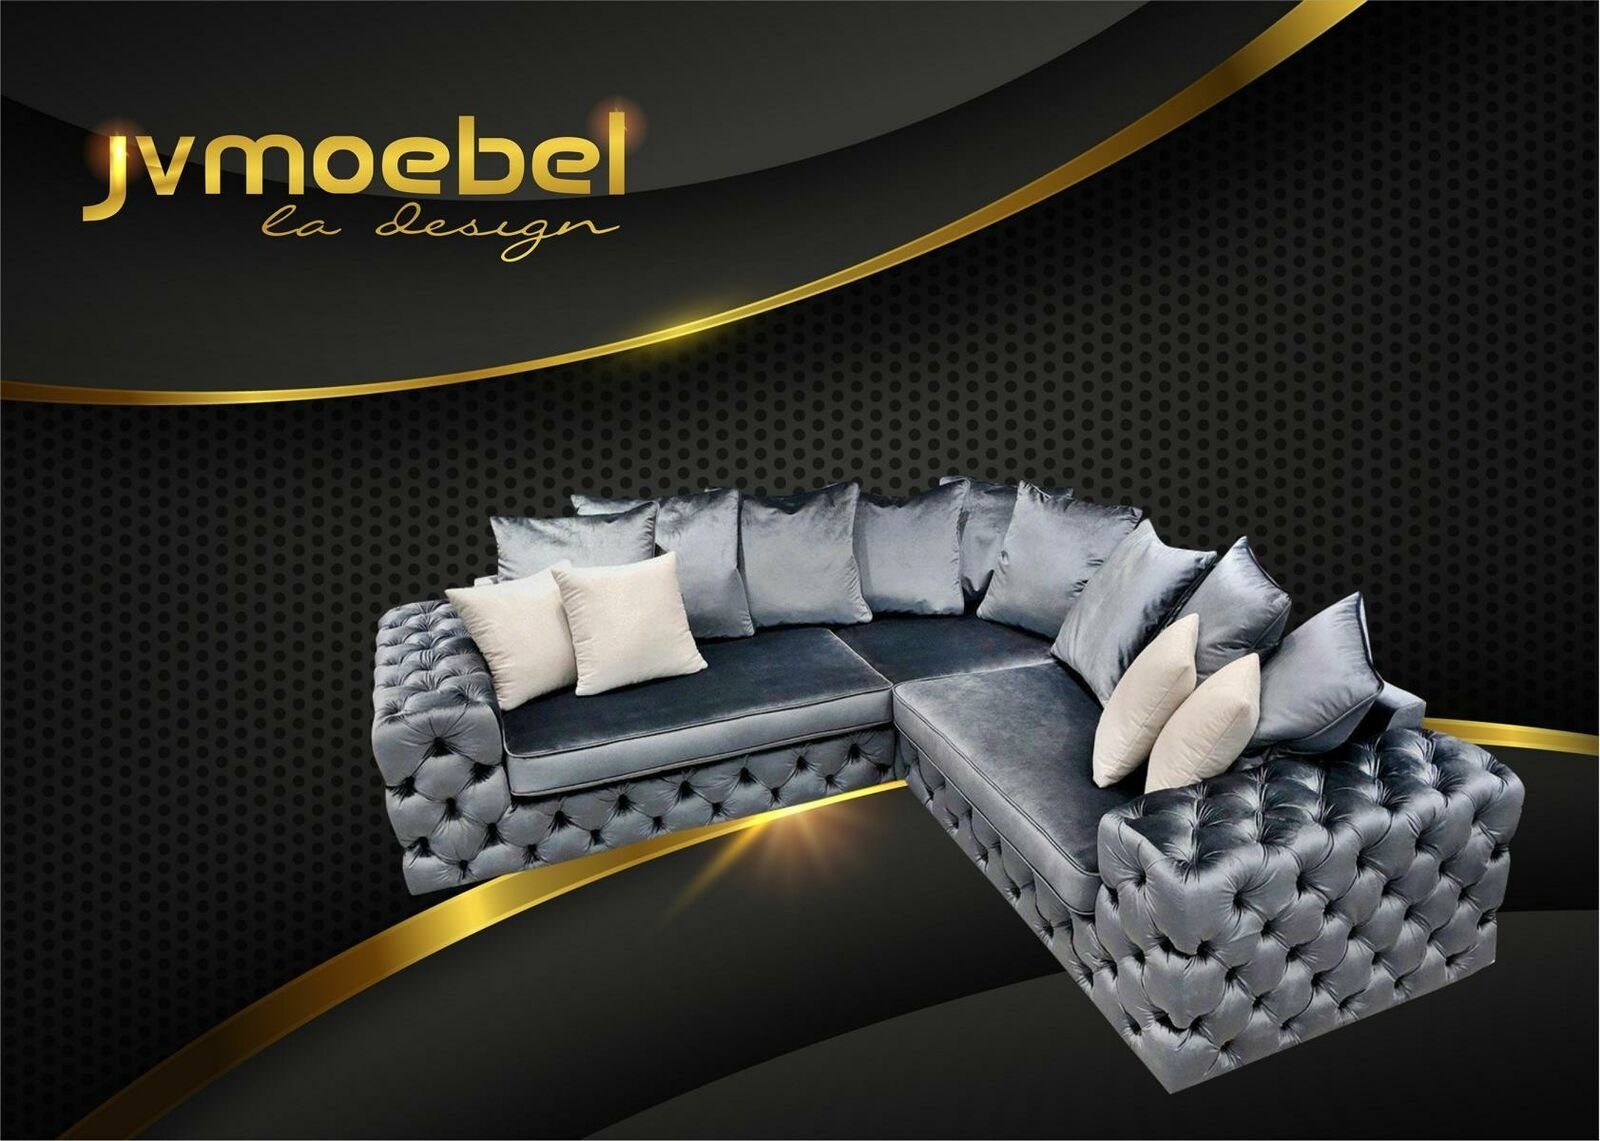 JVmoebel Ecksofa Wohnlandschaft L-Form Ecksofa Couch Design Polster Textil Grau